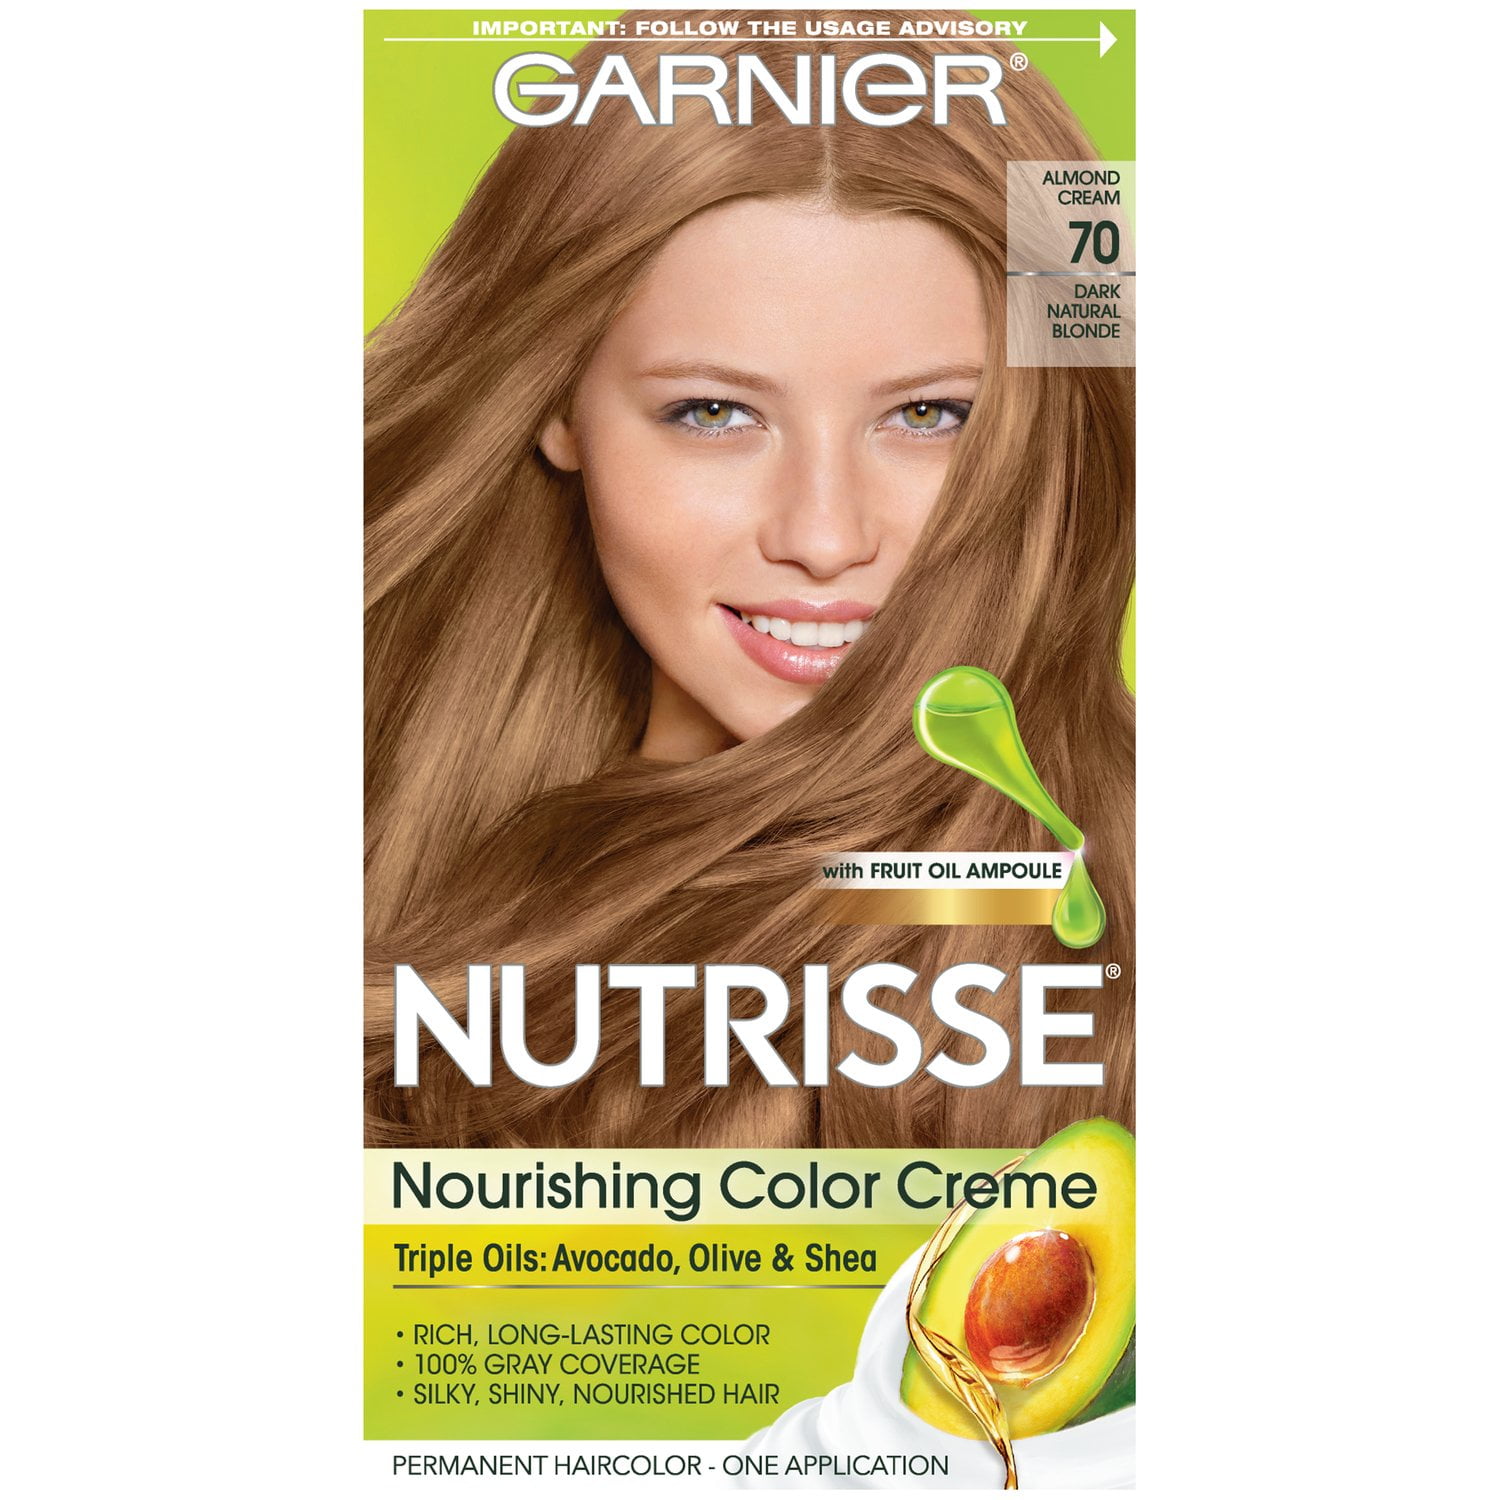 Garnier Hair Color Nutrisse Nourishing Creme, 70 Dark Natural Blonde  (Almond Crème) Permanent Hair Dye, 1 Count (Packaging May Vary)